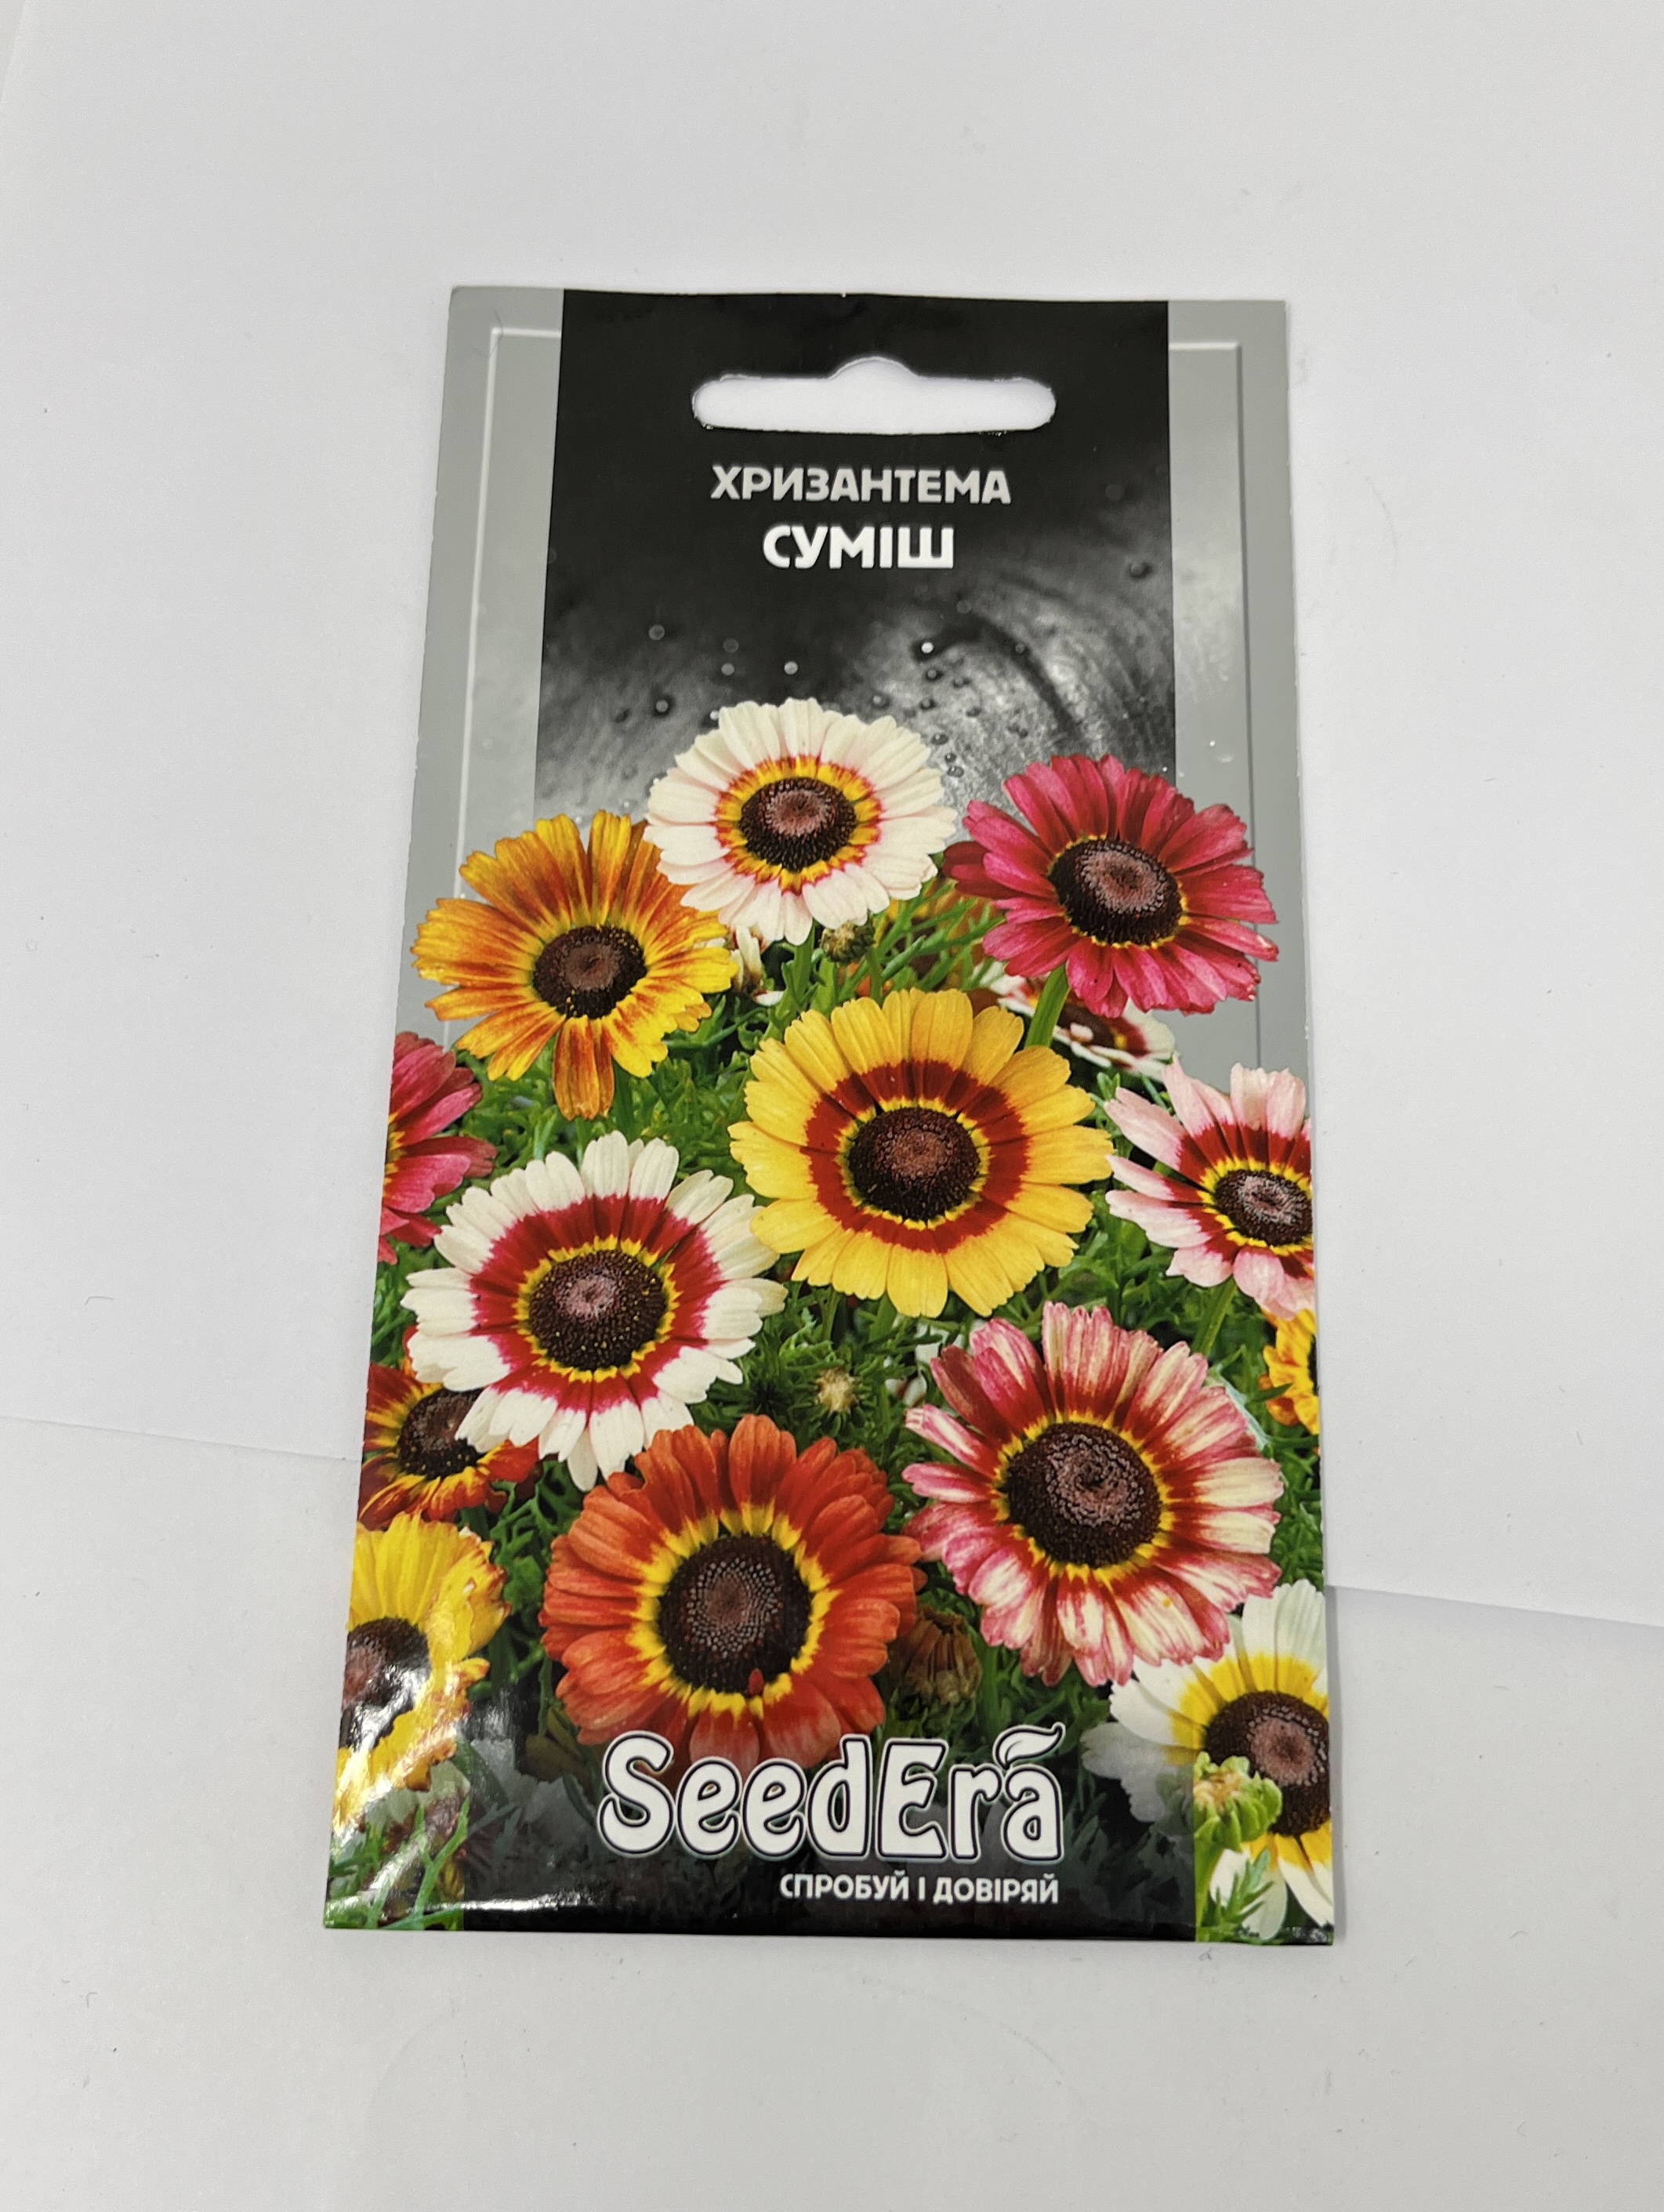 chrysanthemum seeds